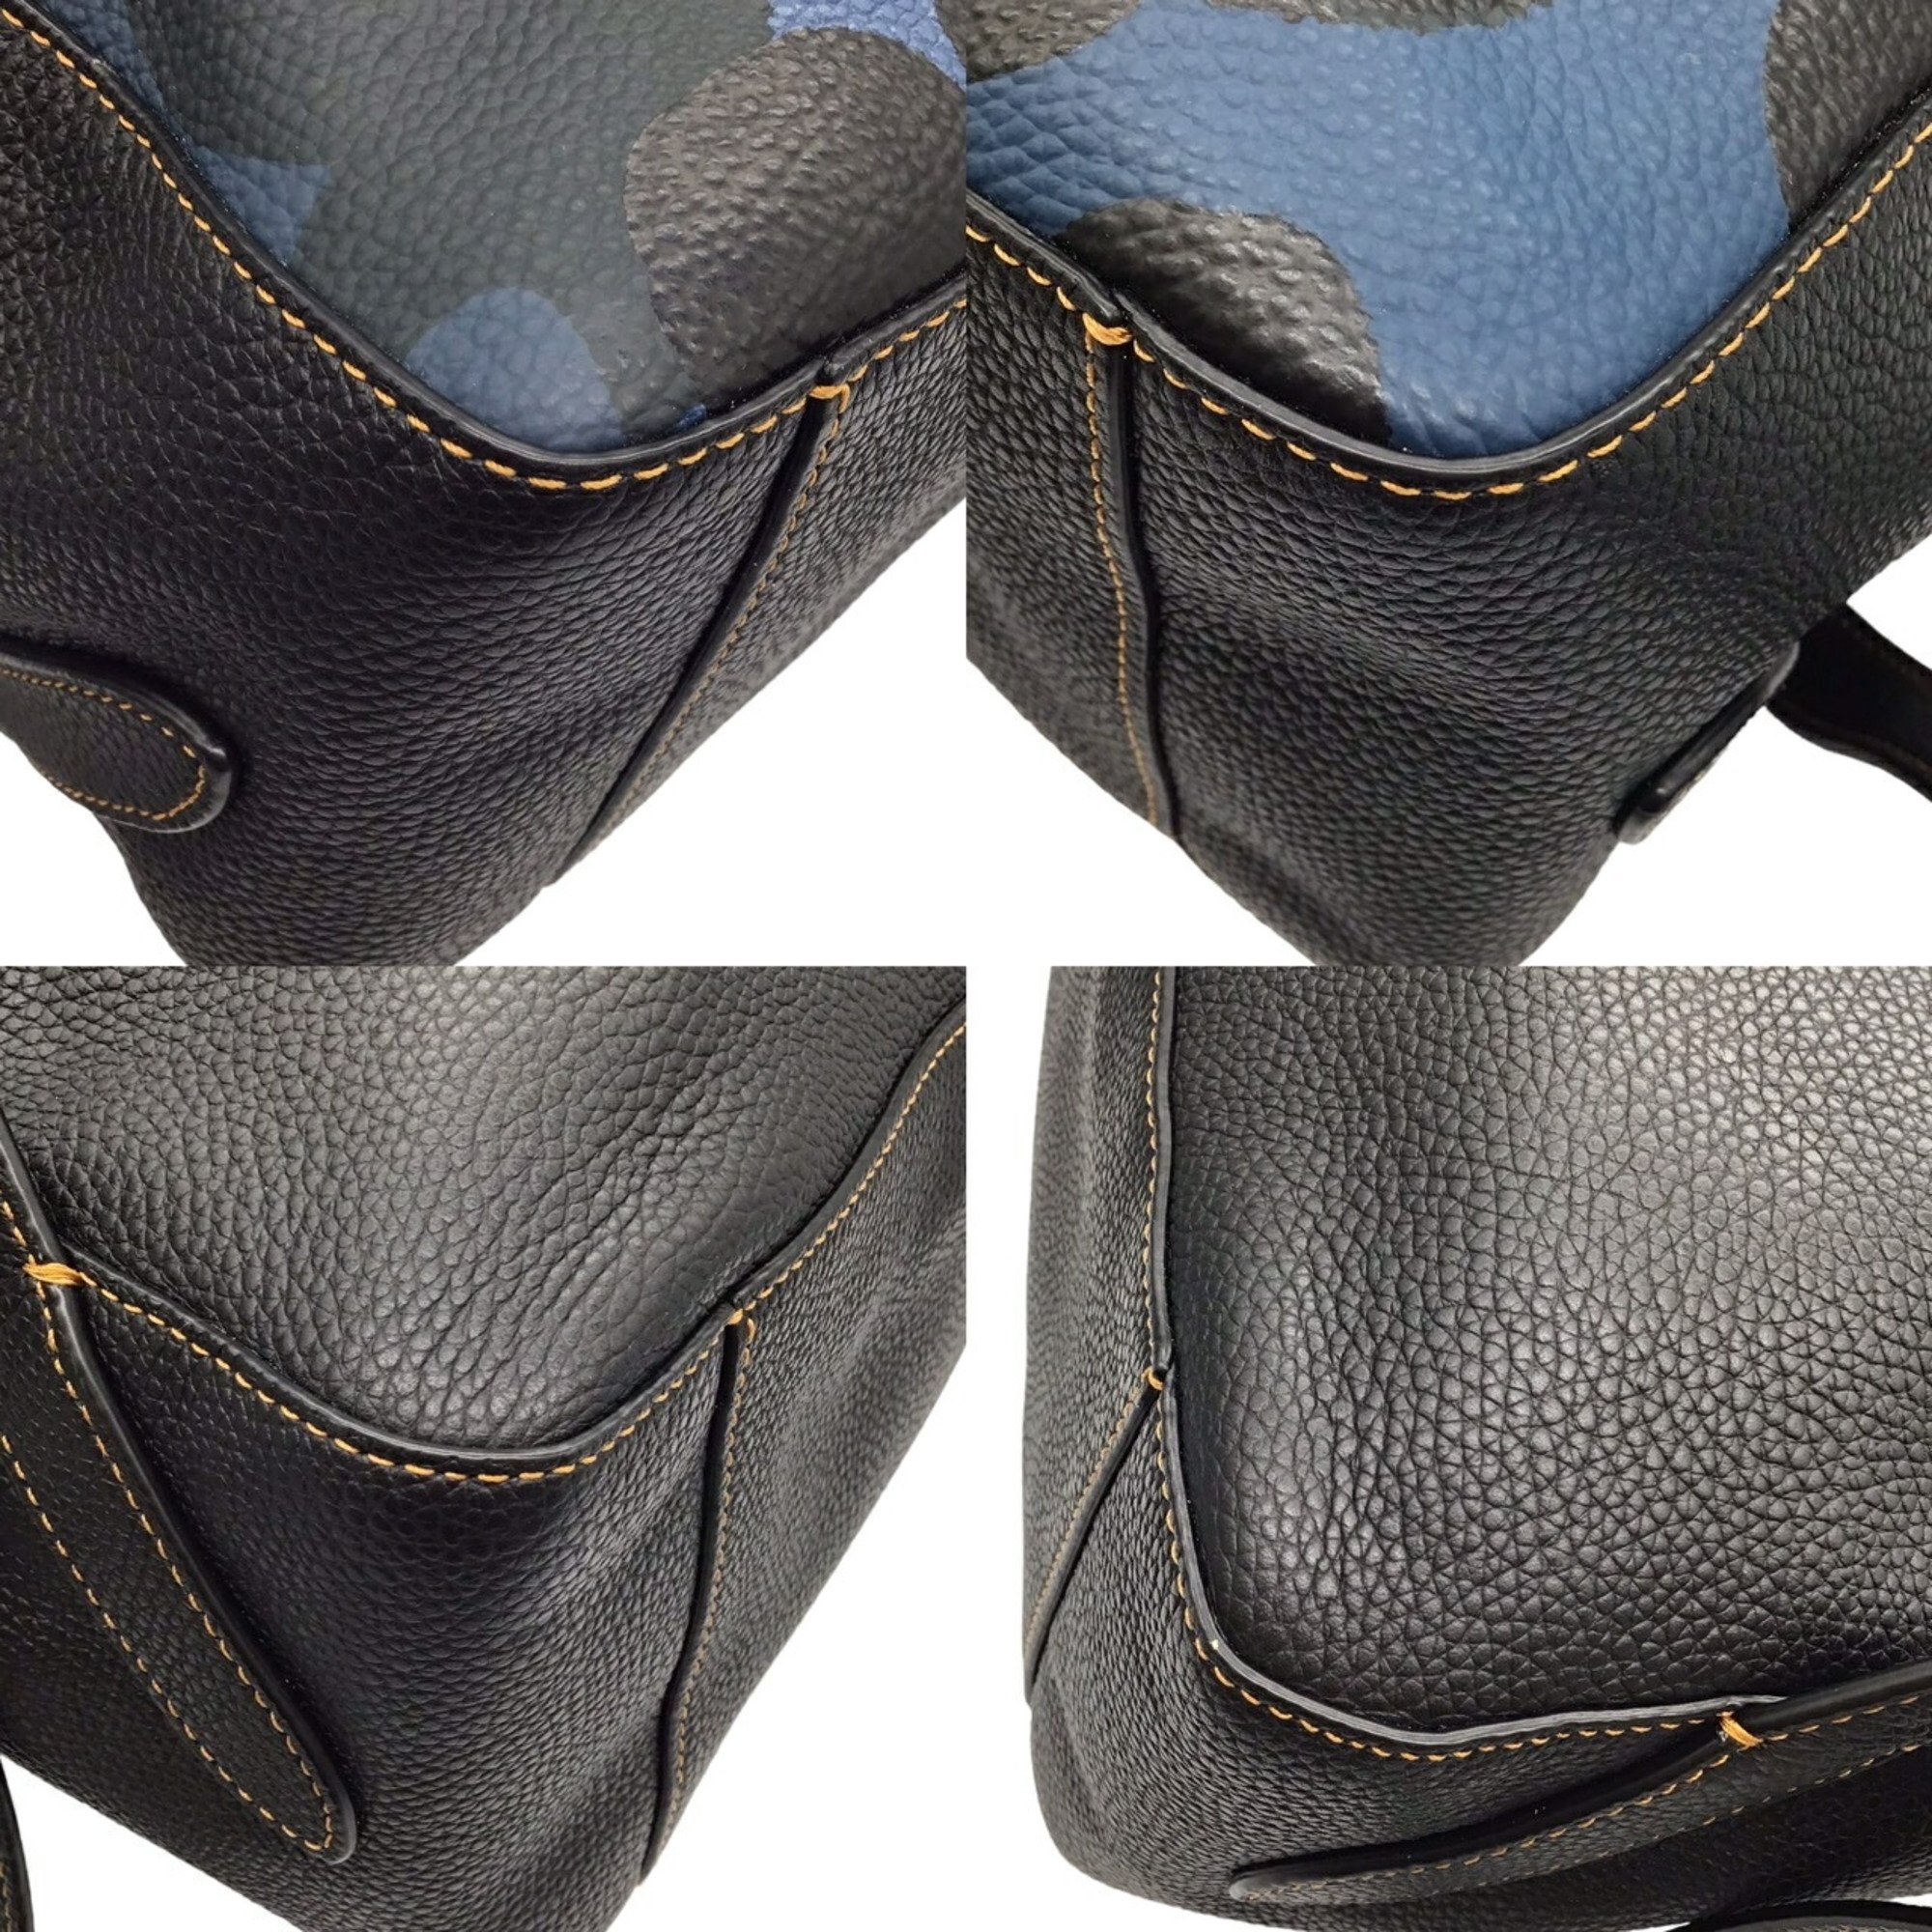 COACH camouflage rucksack backpack blue black bag for men women unisex